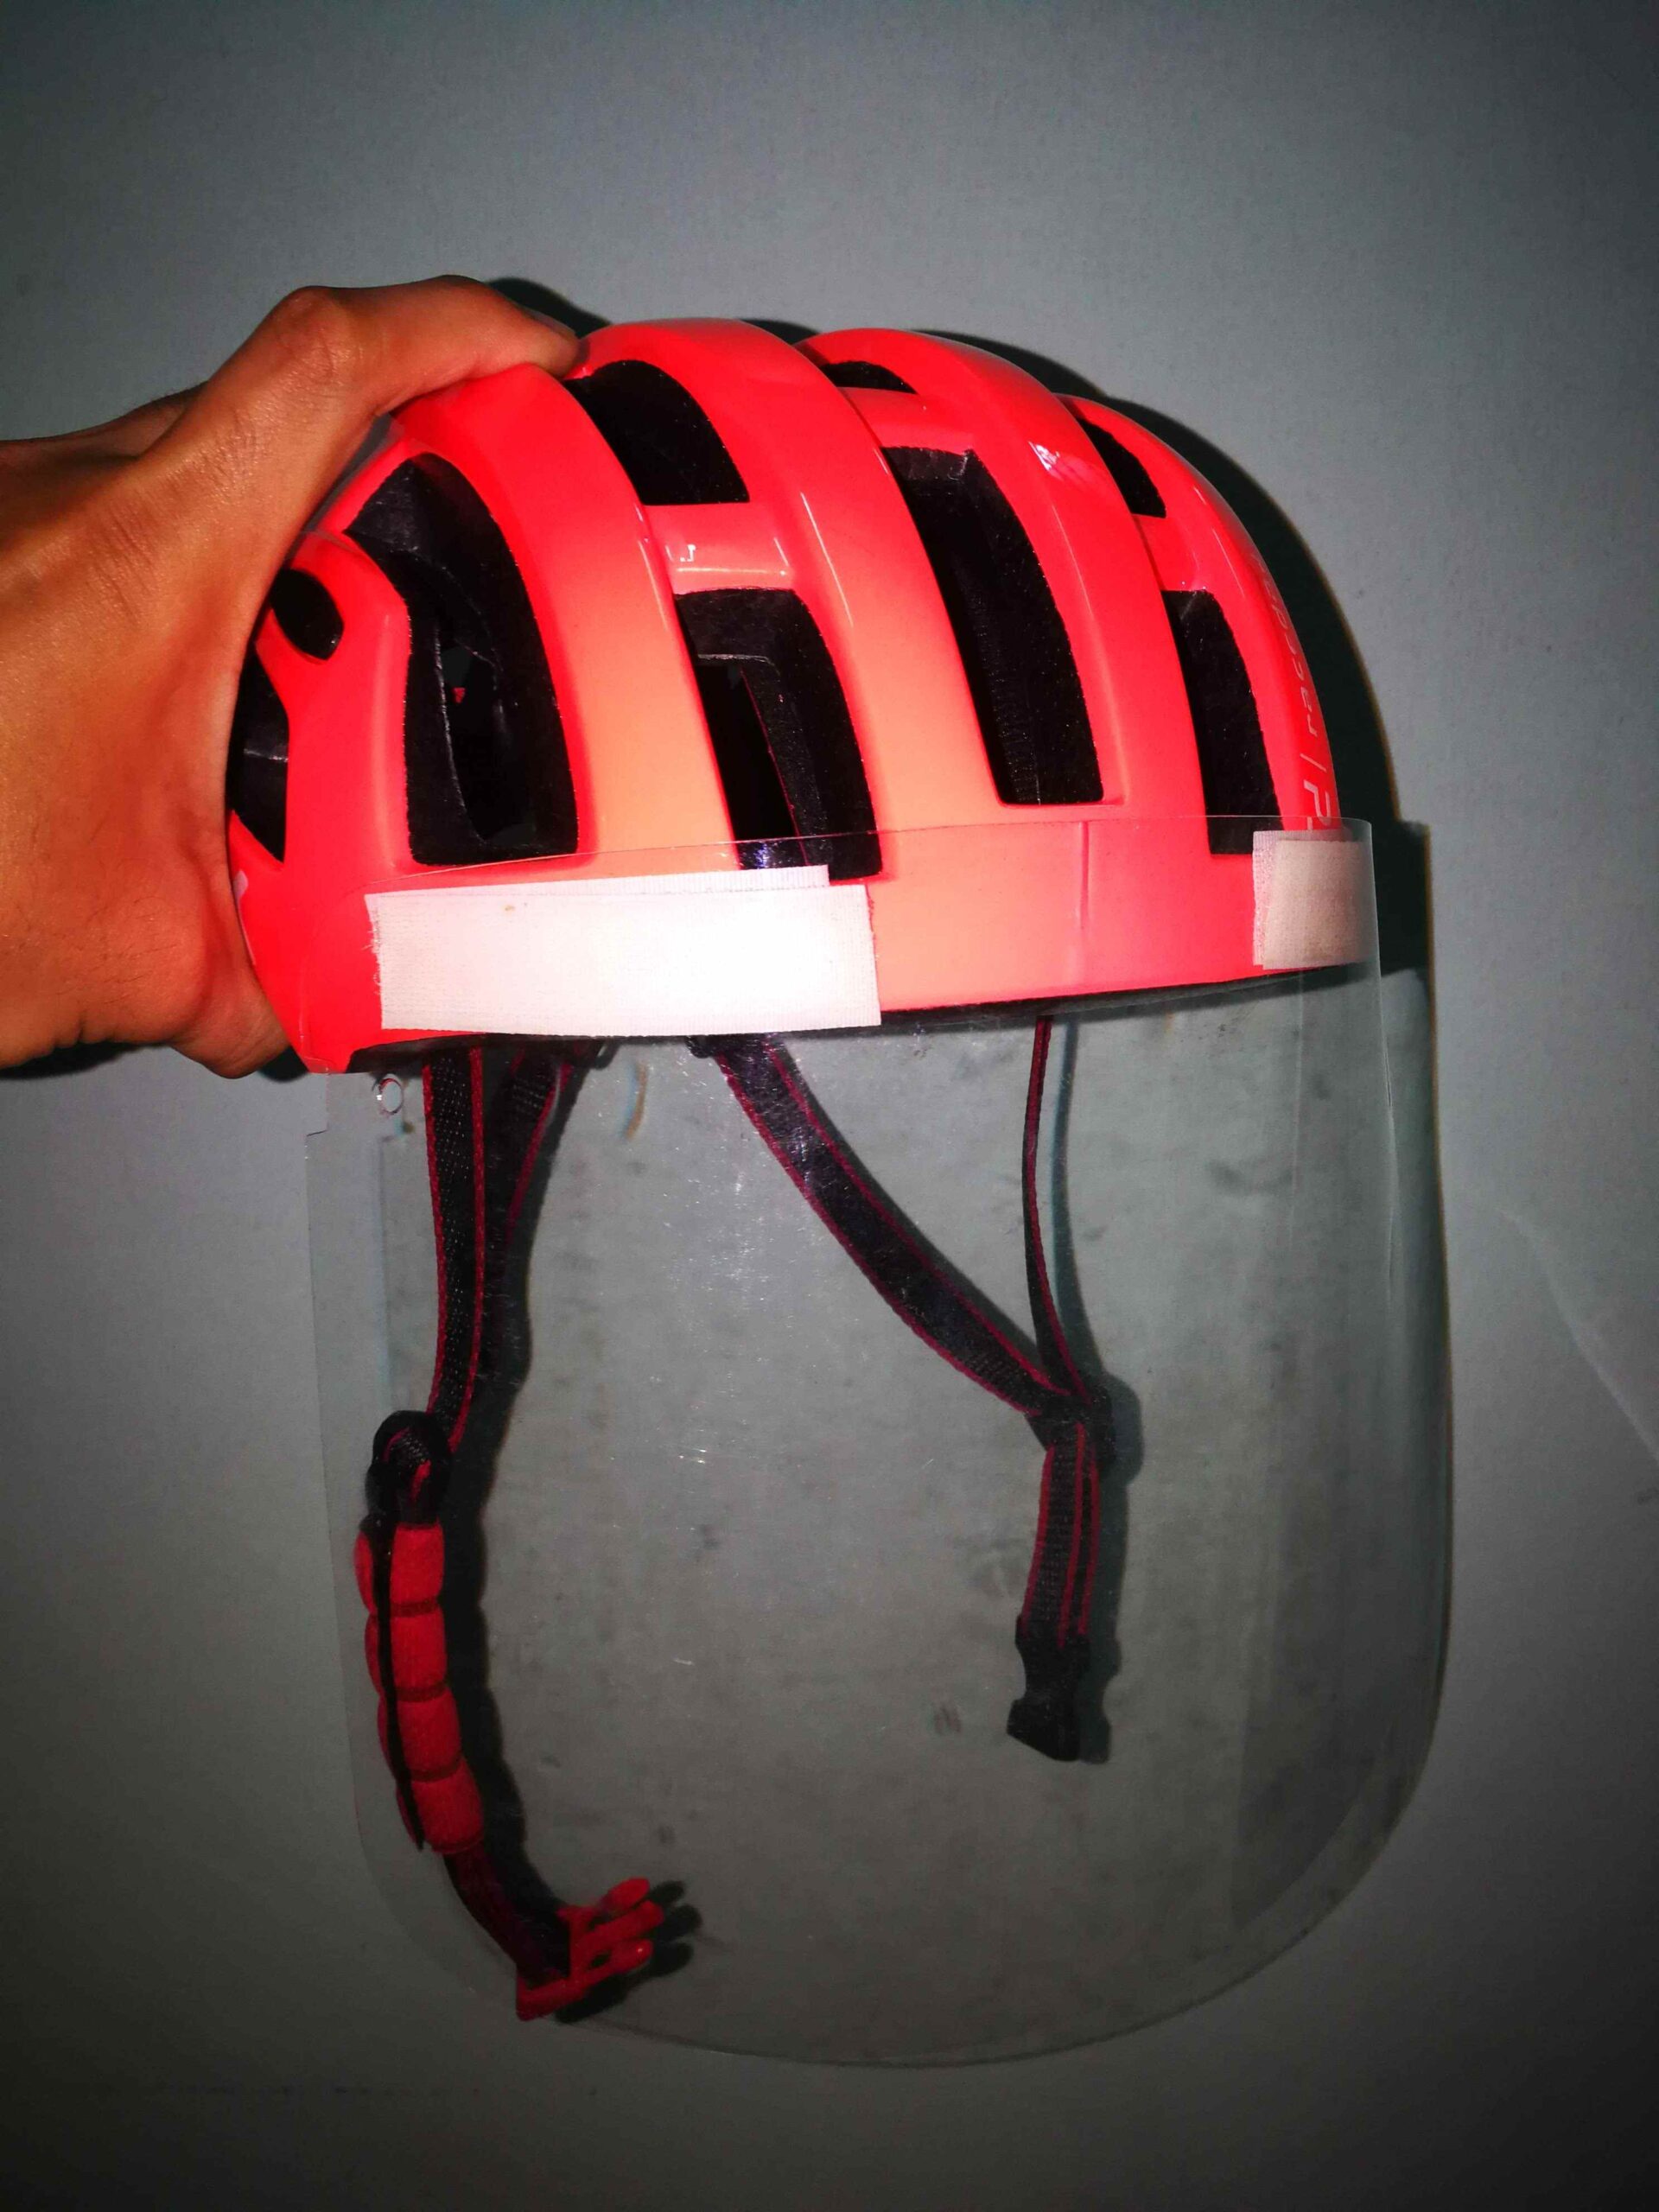 DIY face shield mounted in front of bike helmet